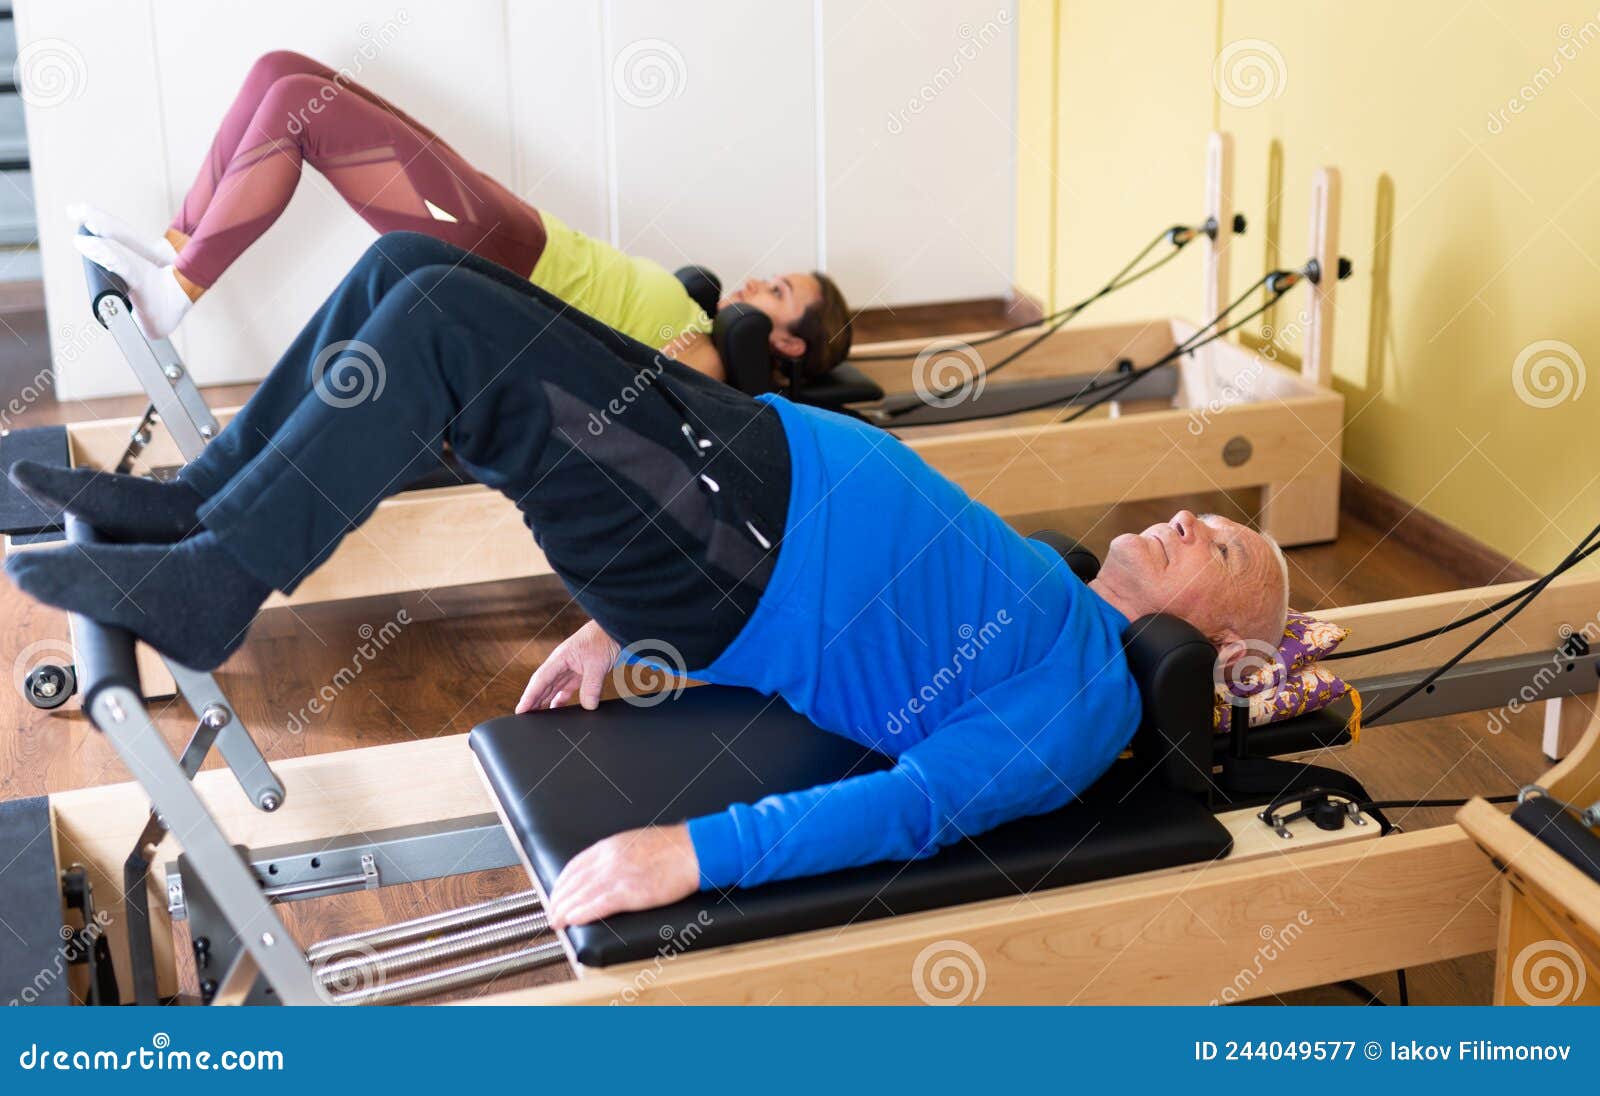 older man doing exercises of remedial gymnastic on pilates reformer